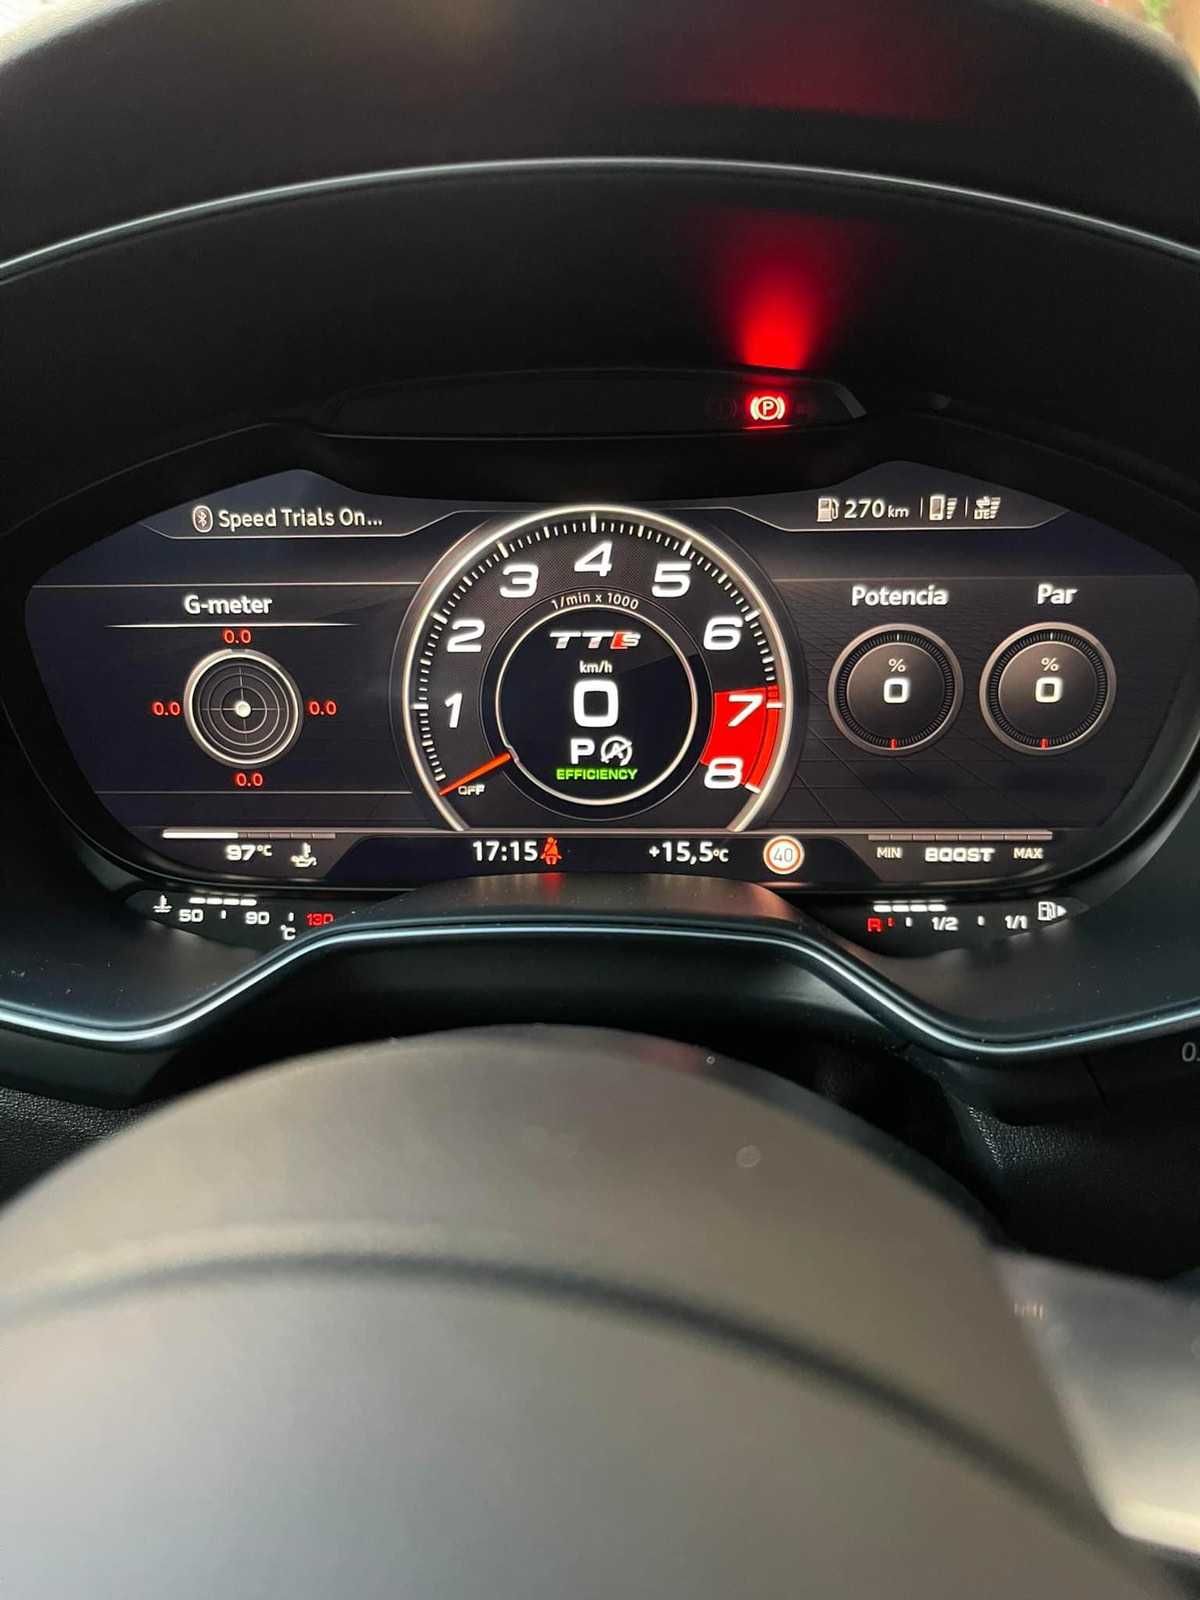 Audi Sport Cockpit Виртуално Спортно Оформление Audi MIB Пловдив